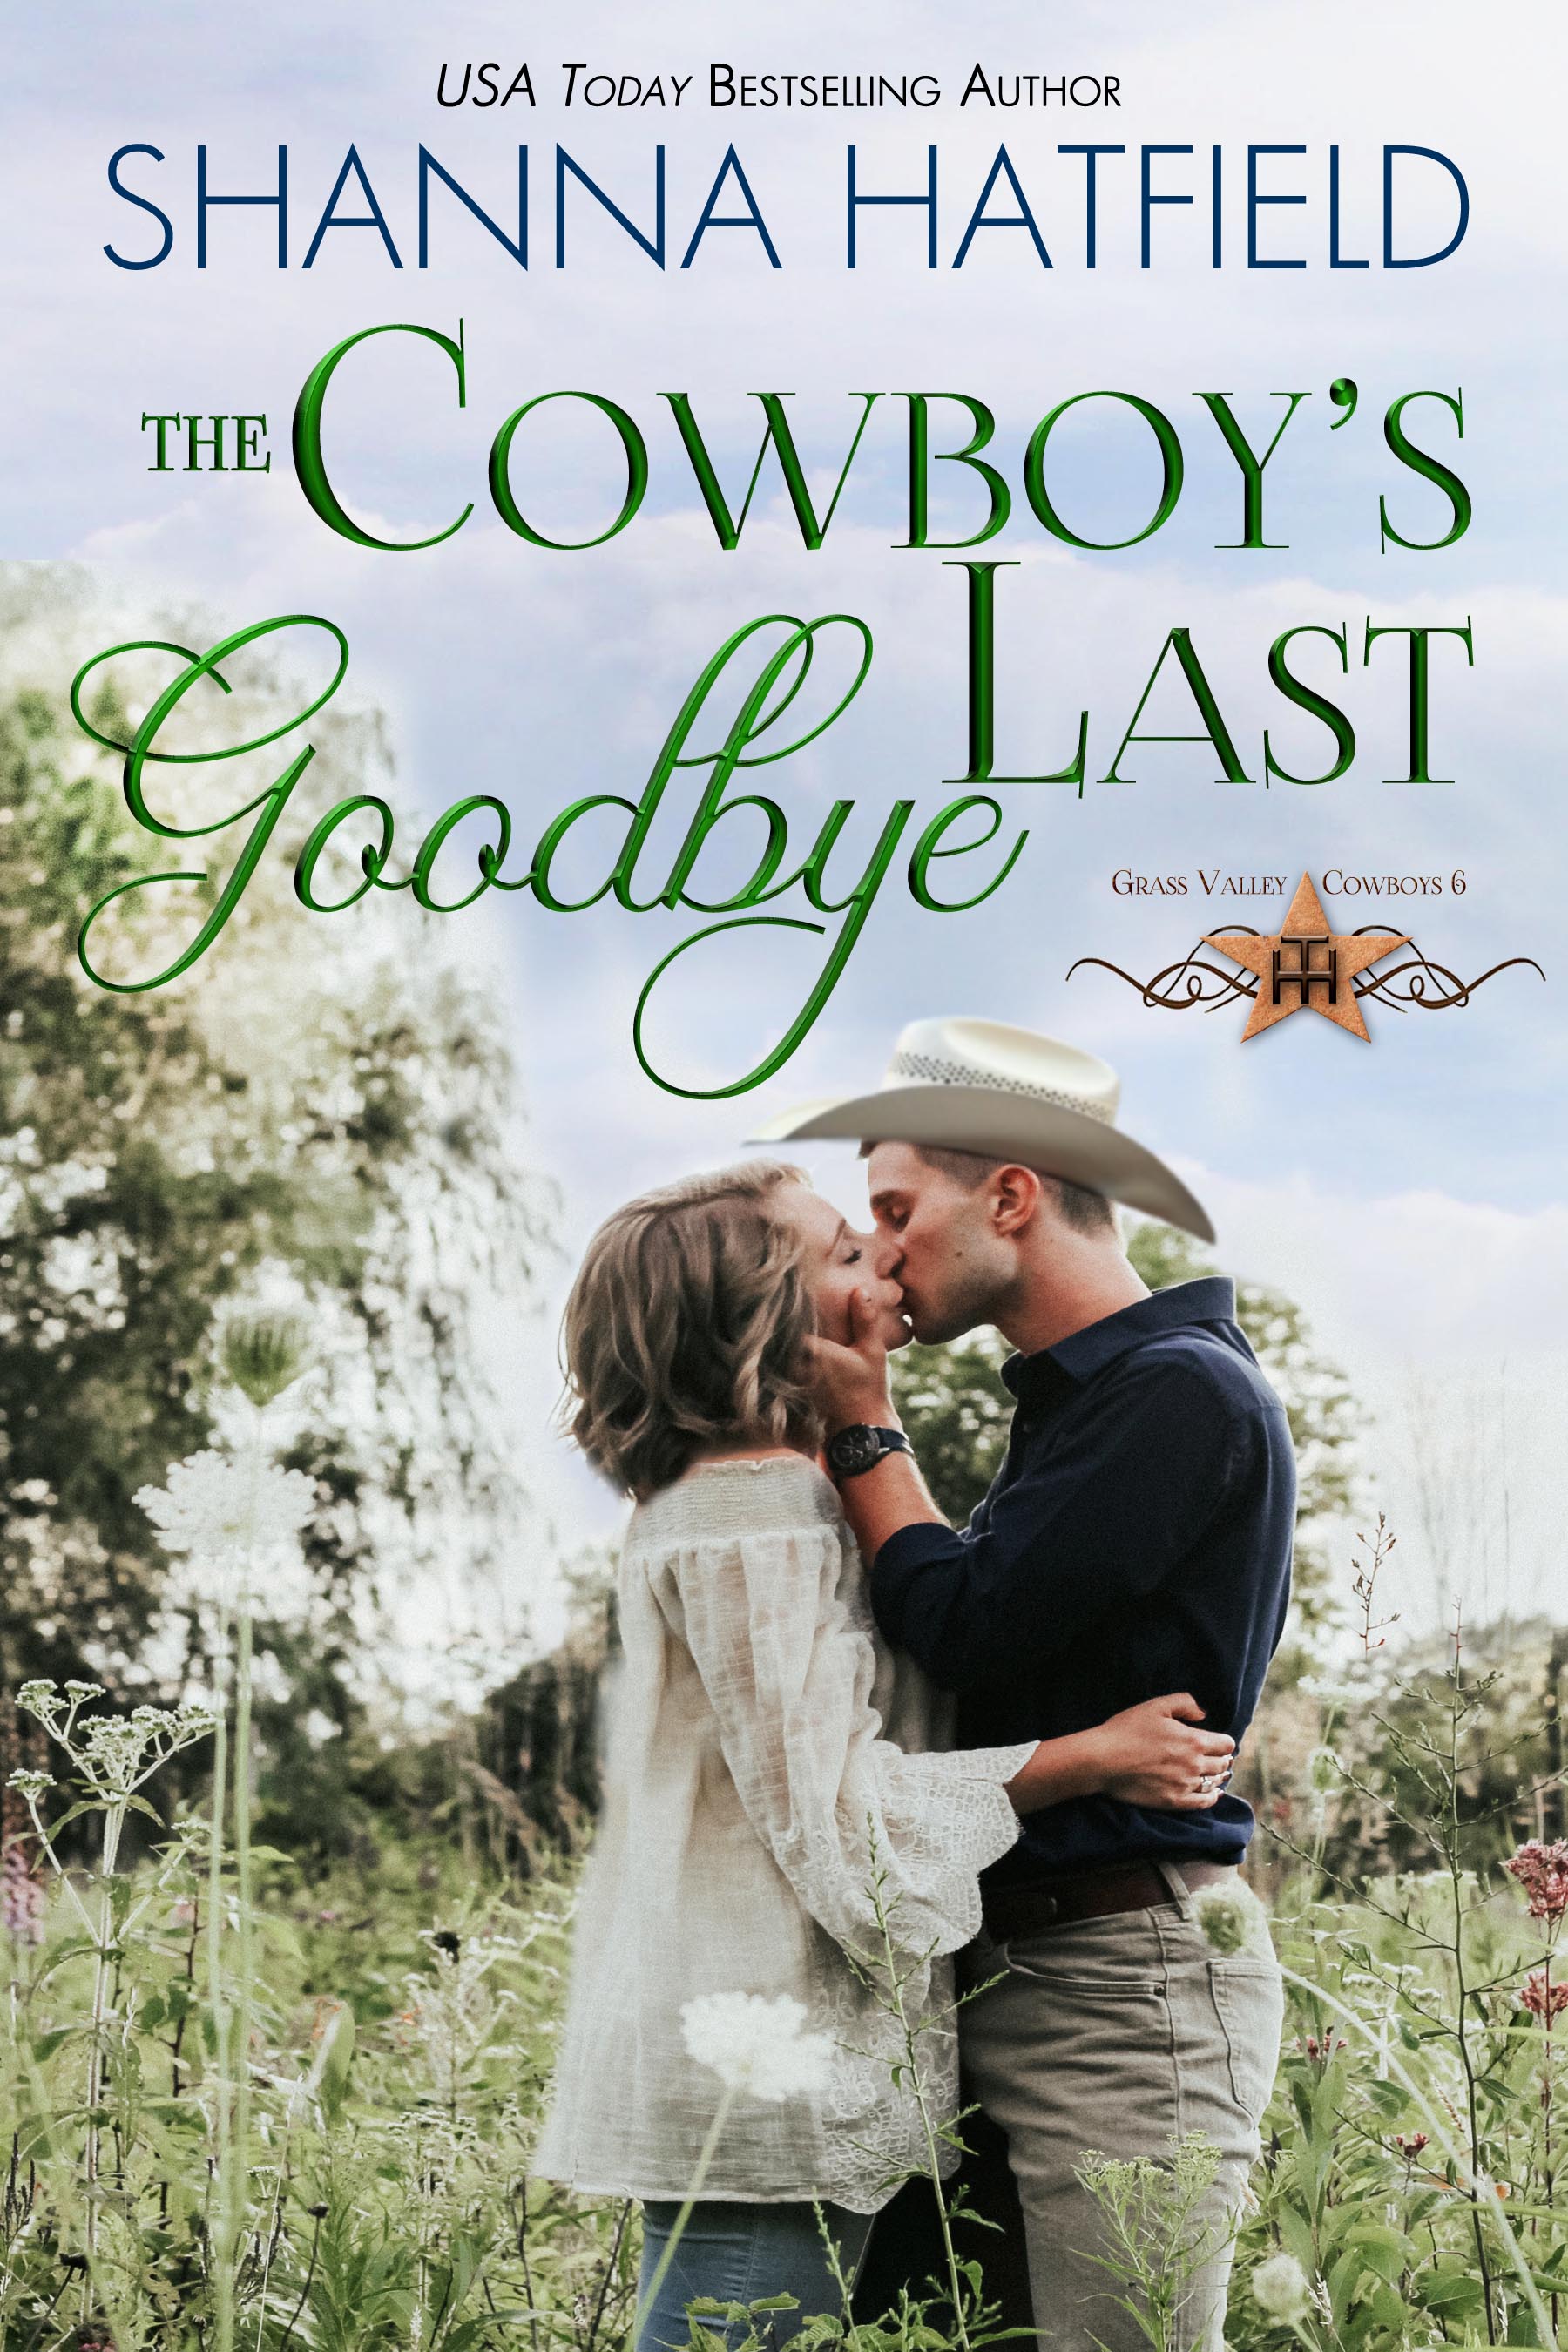 Cowboy's Last Goodbye